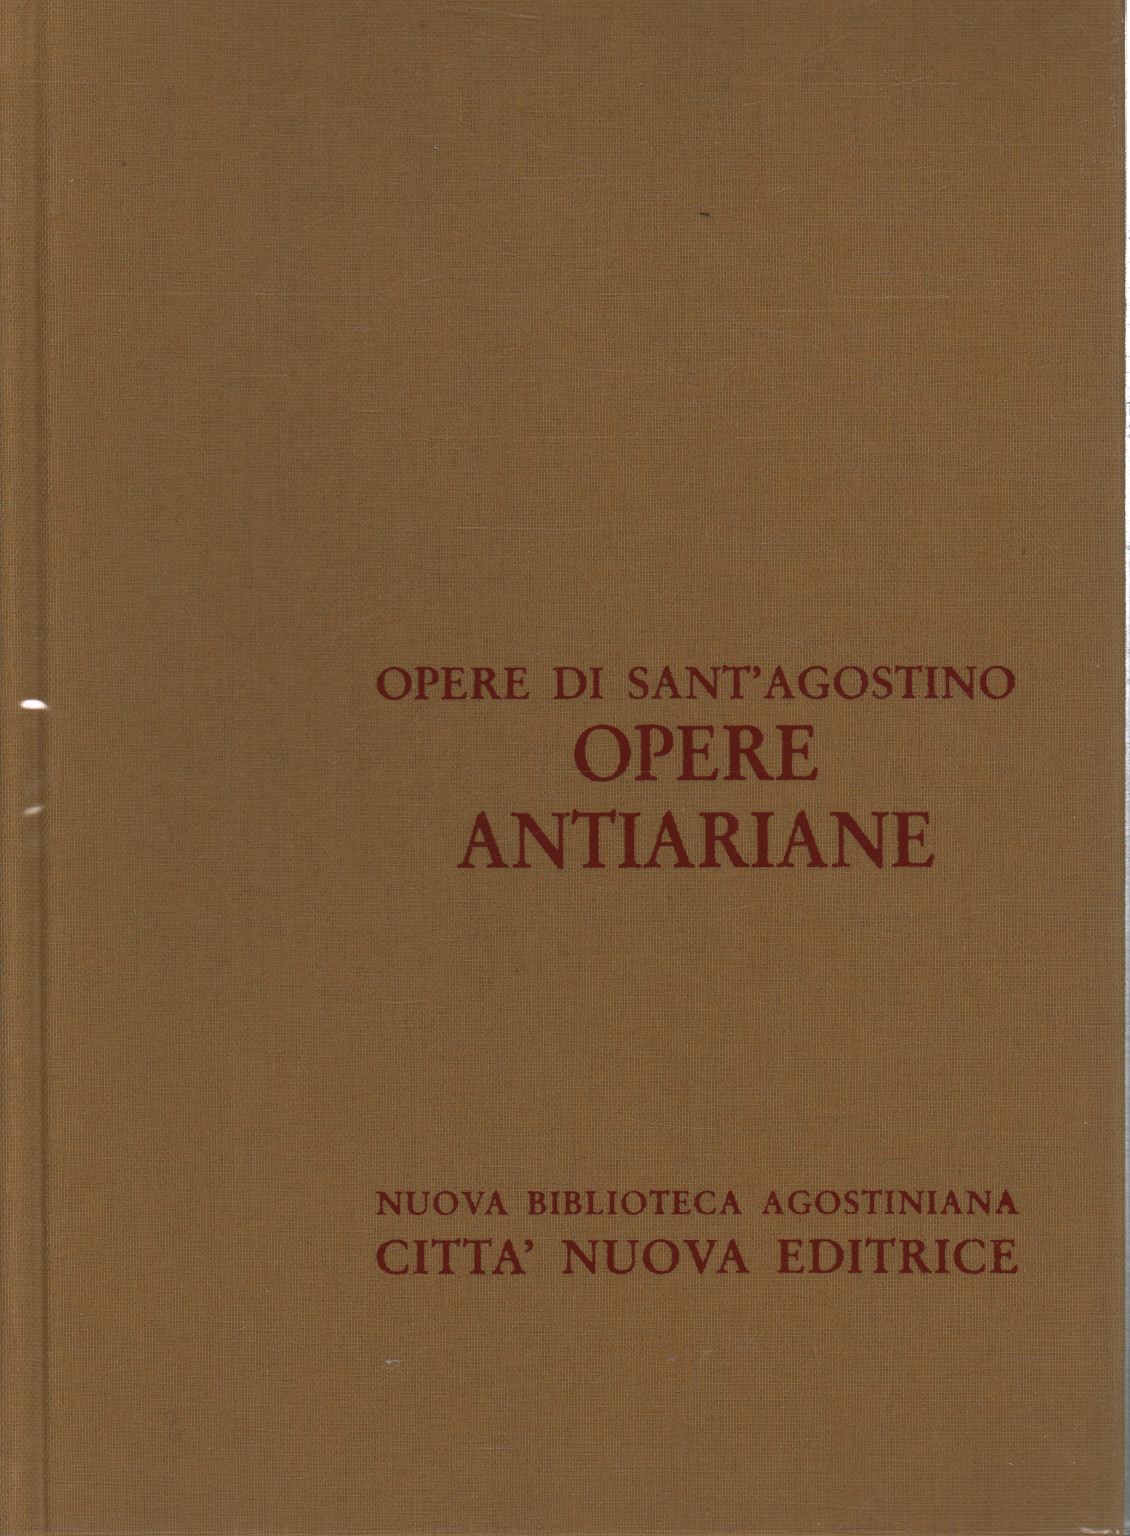 Works antiariane (vol. XII/2), s.a.